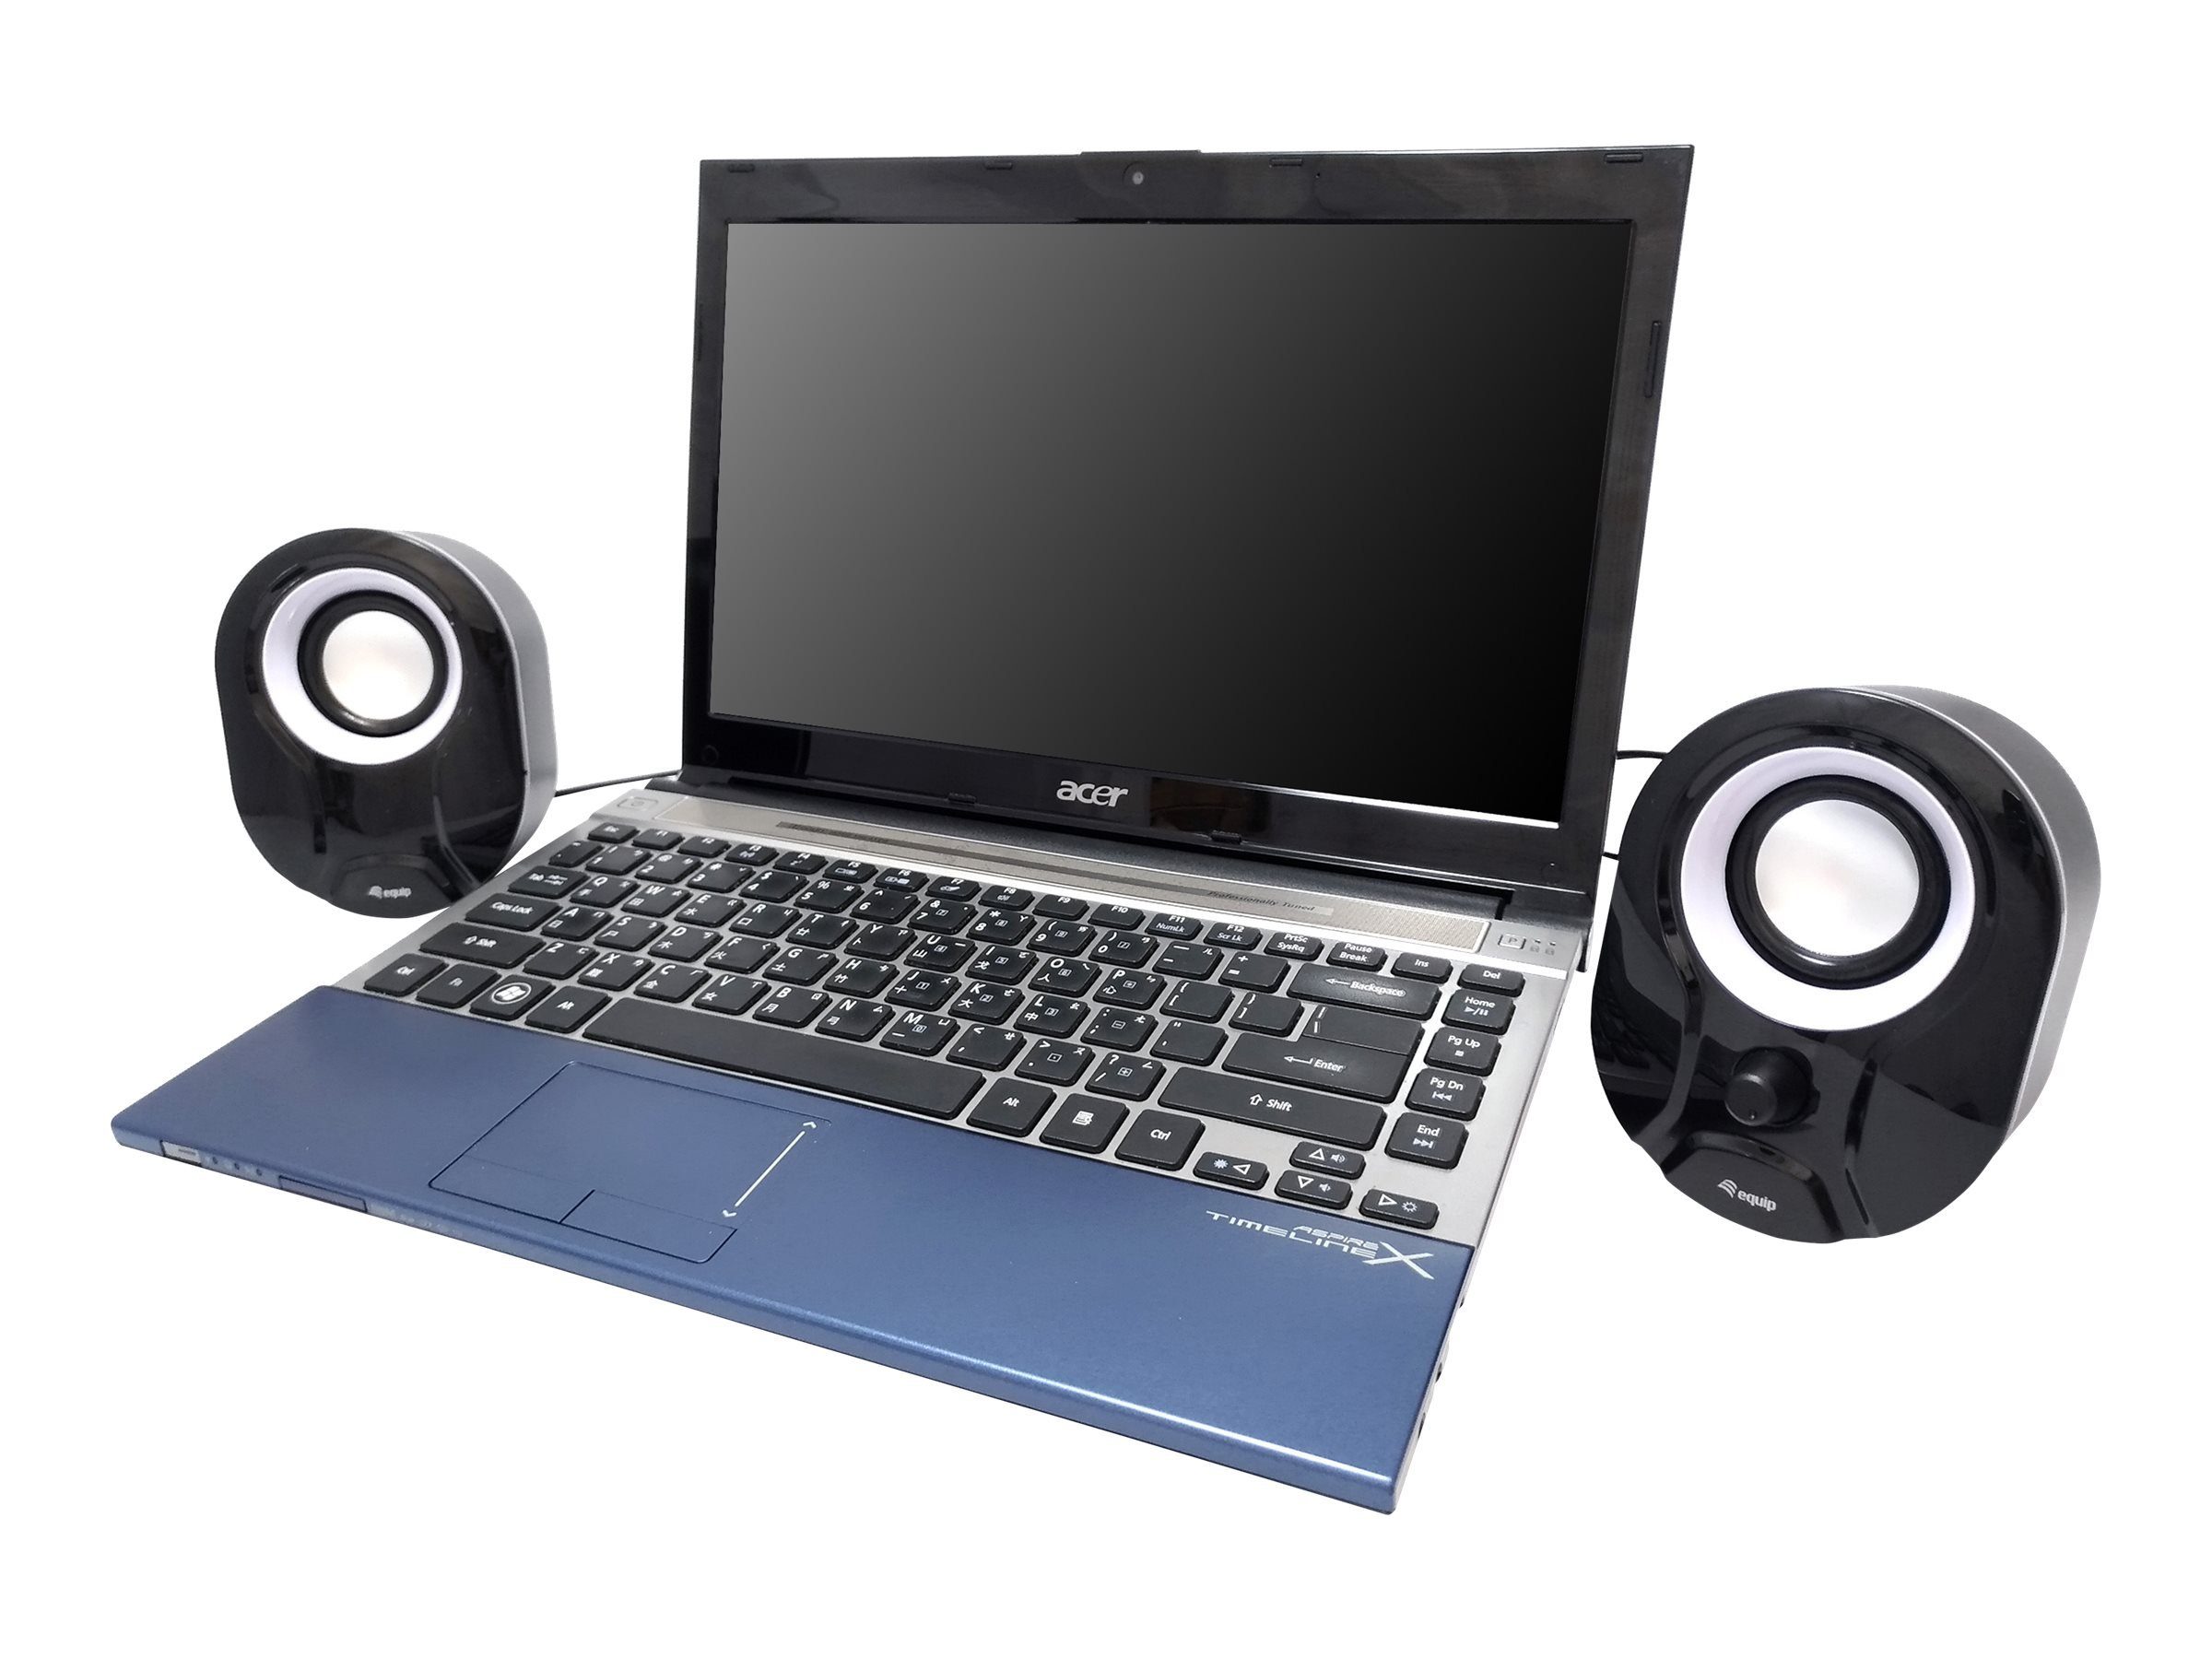 EQUIP u. f. 2.0 schwarz/wei DATA Stereo PC-Lautsprecher Notebook PC, Lautsprecher DIGITAL